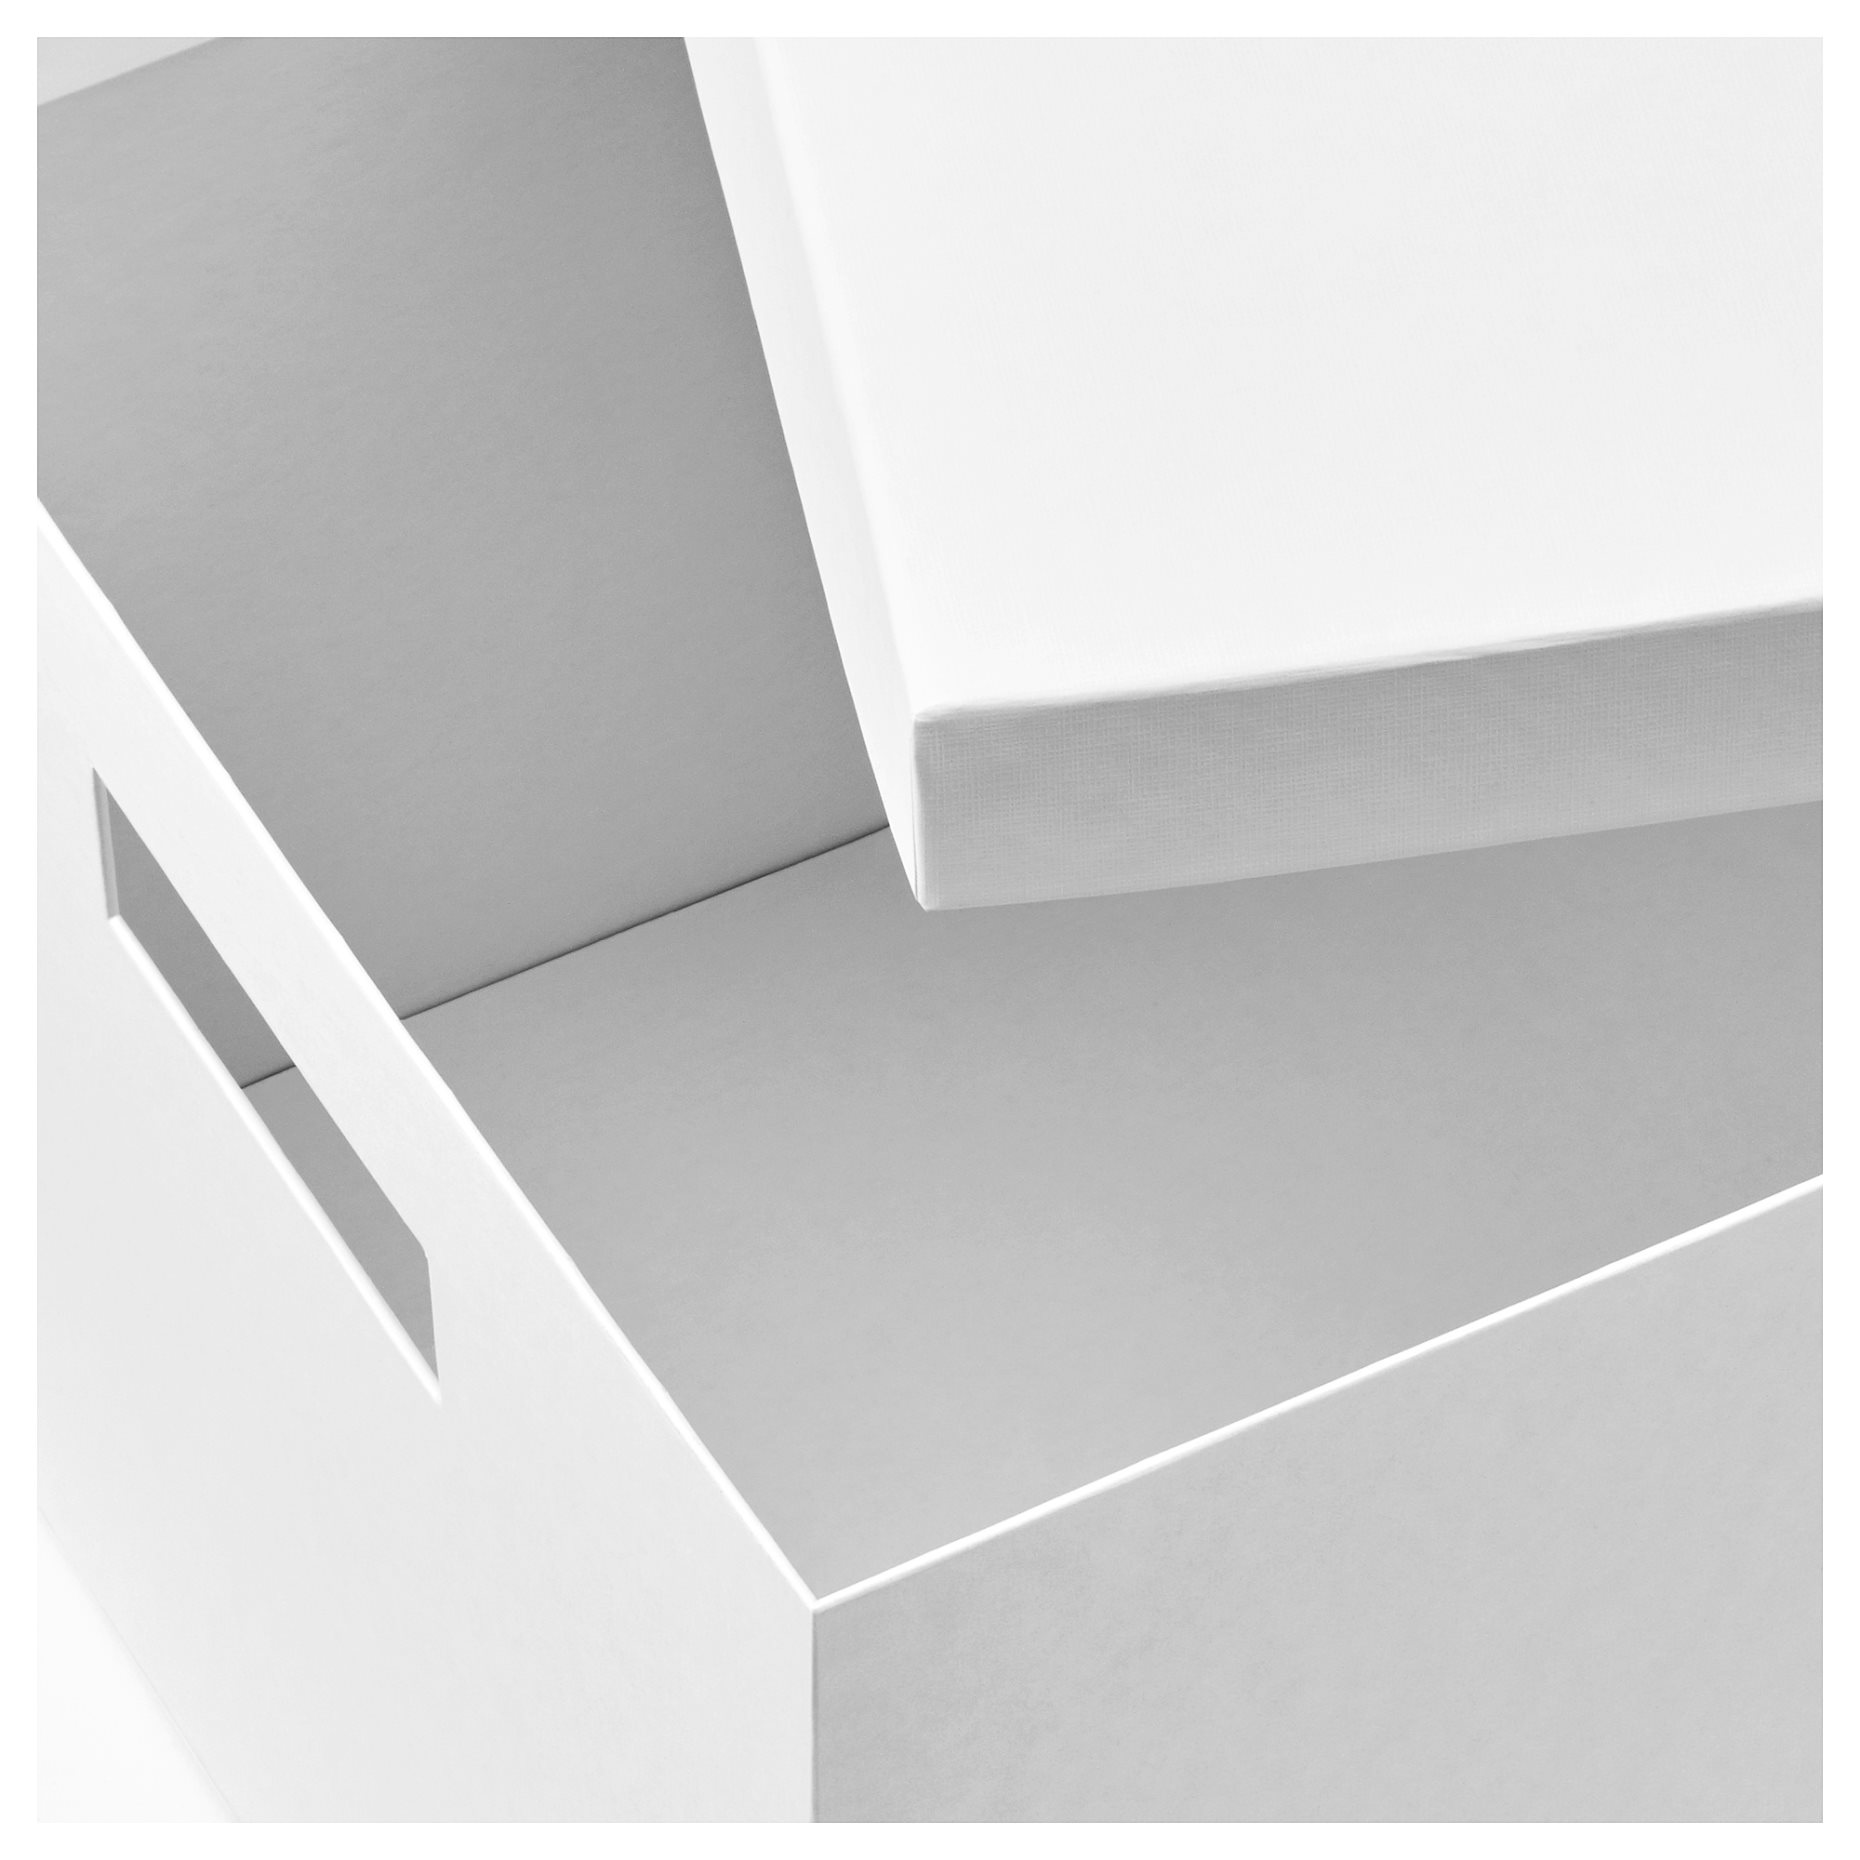 TJENA, storage box with lid, 603.954.28